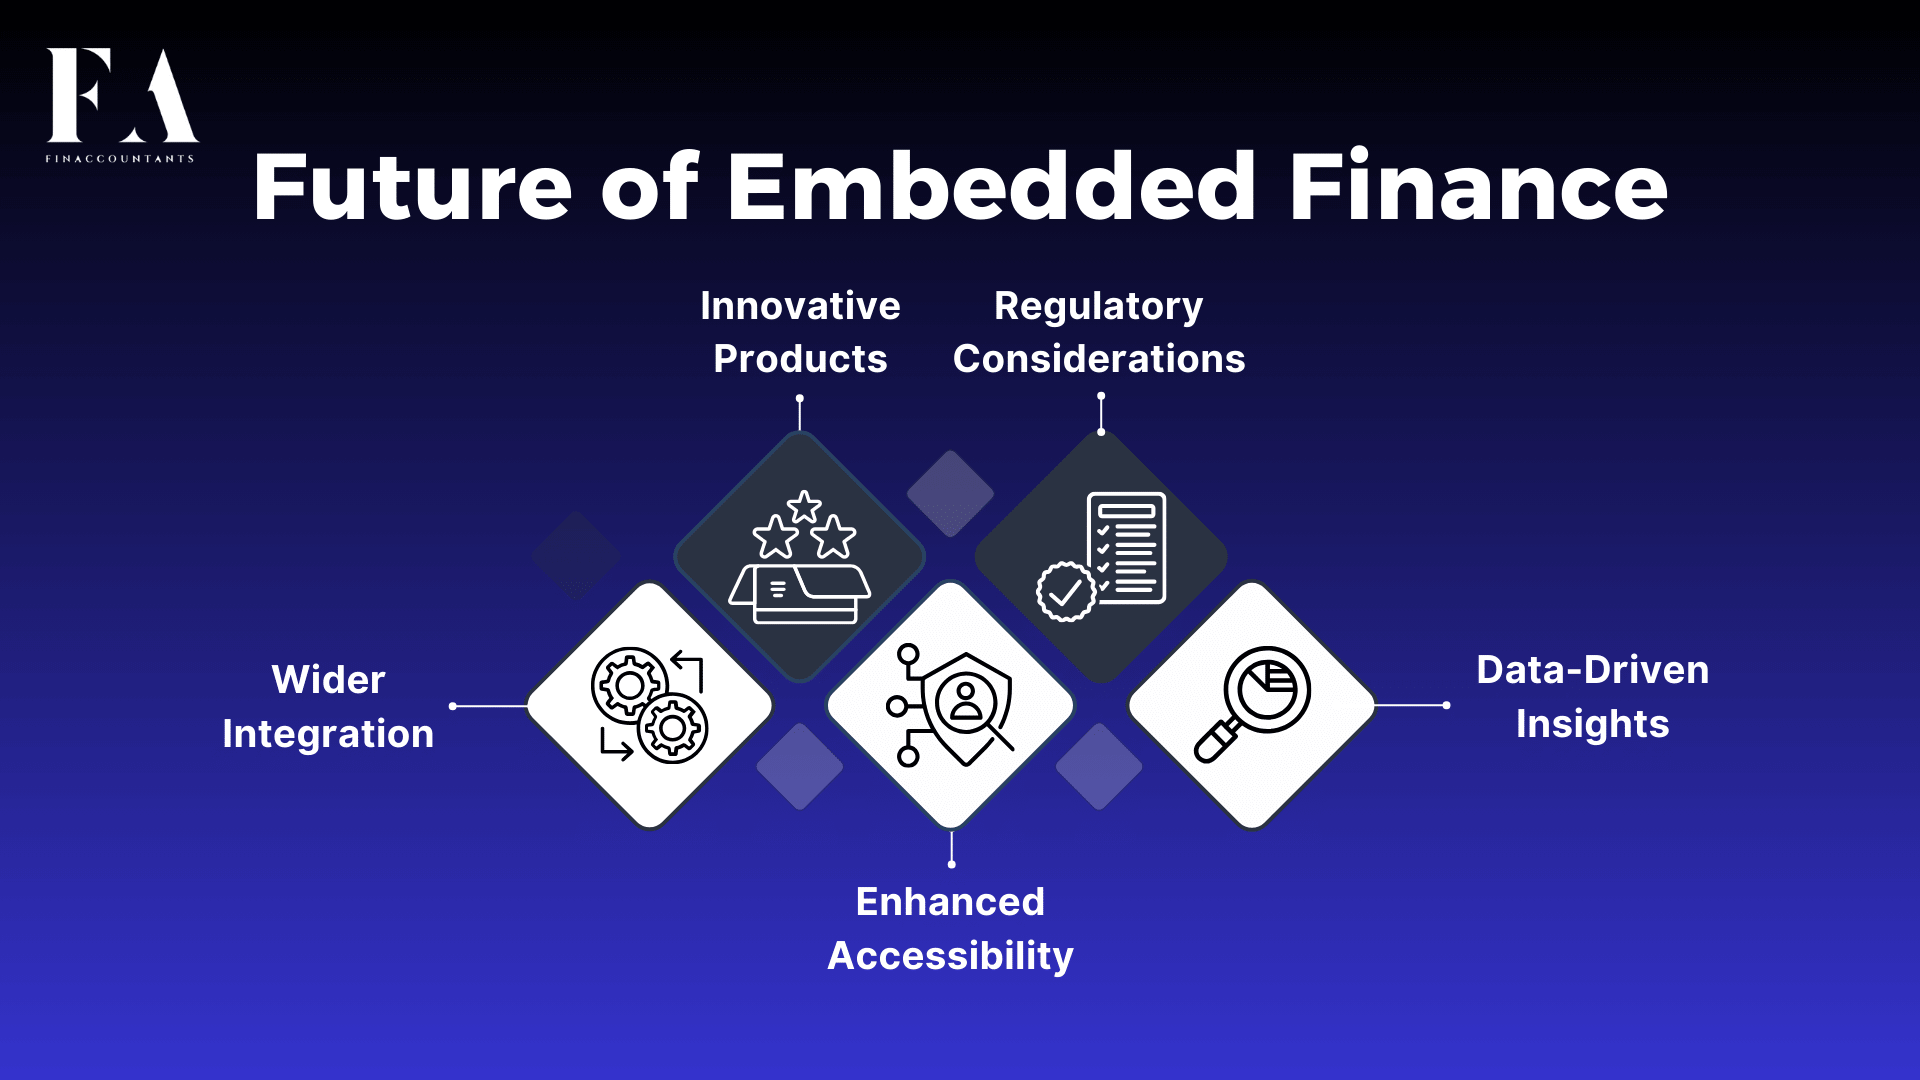 embedded-finance